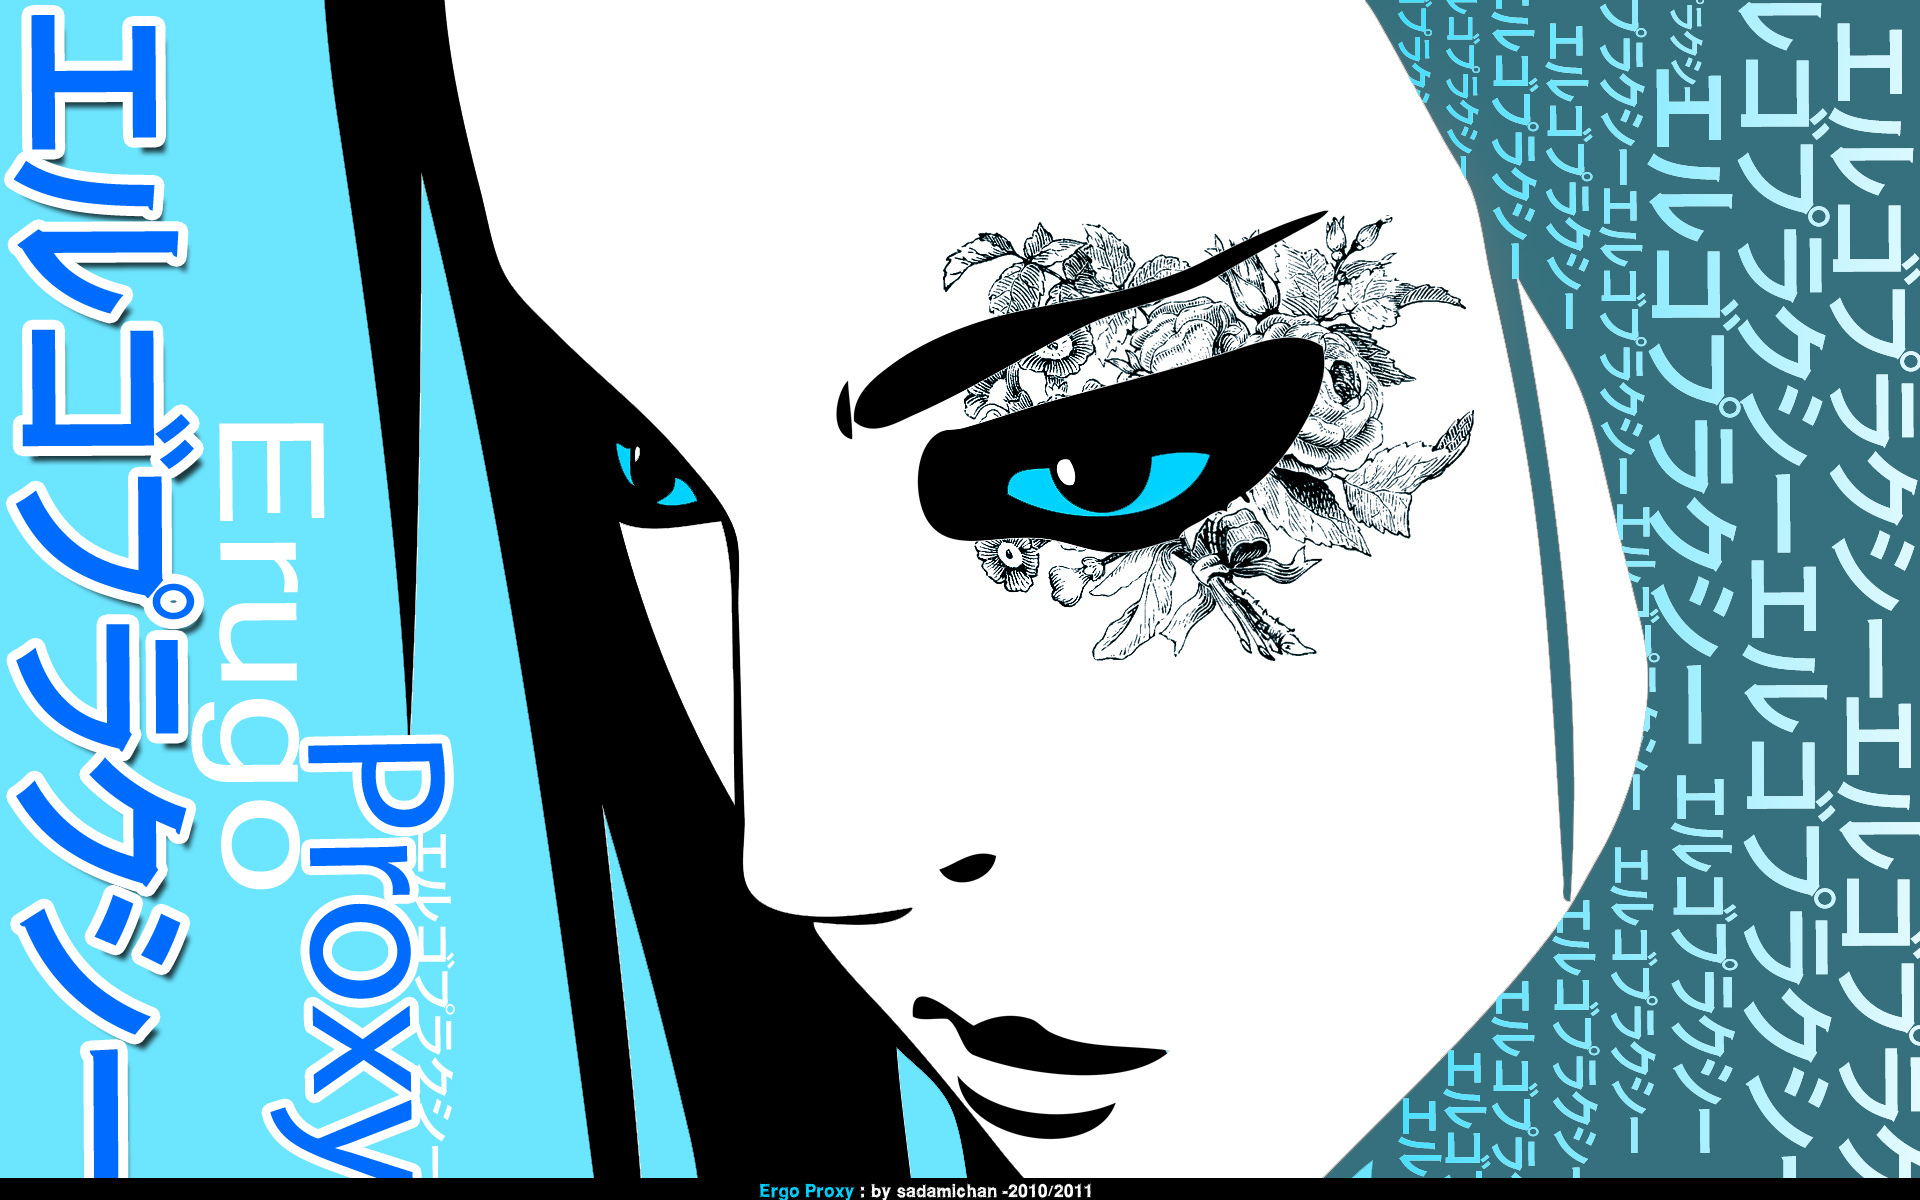 ergo proxy - Other & Anime Background Wallpapers on Desktop Nexus